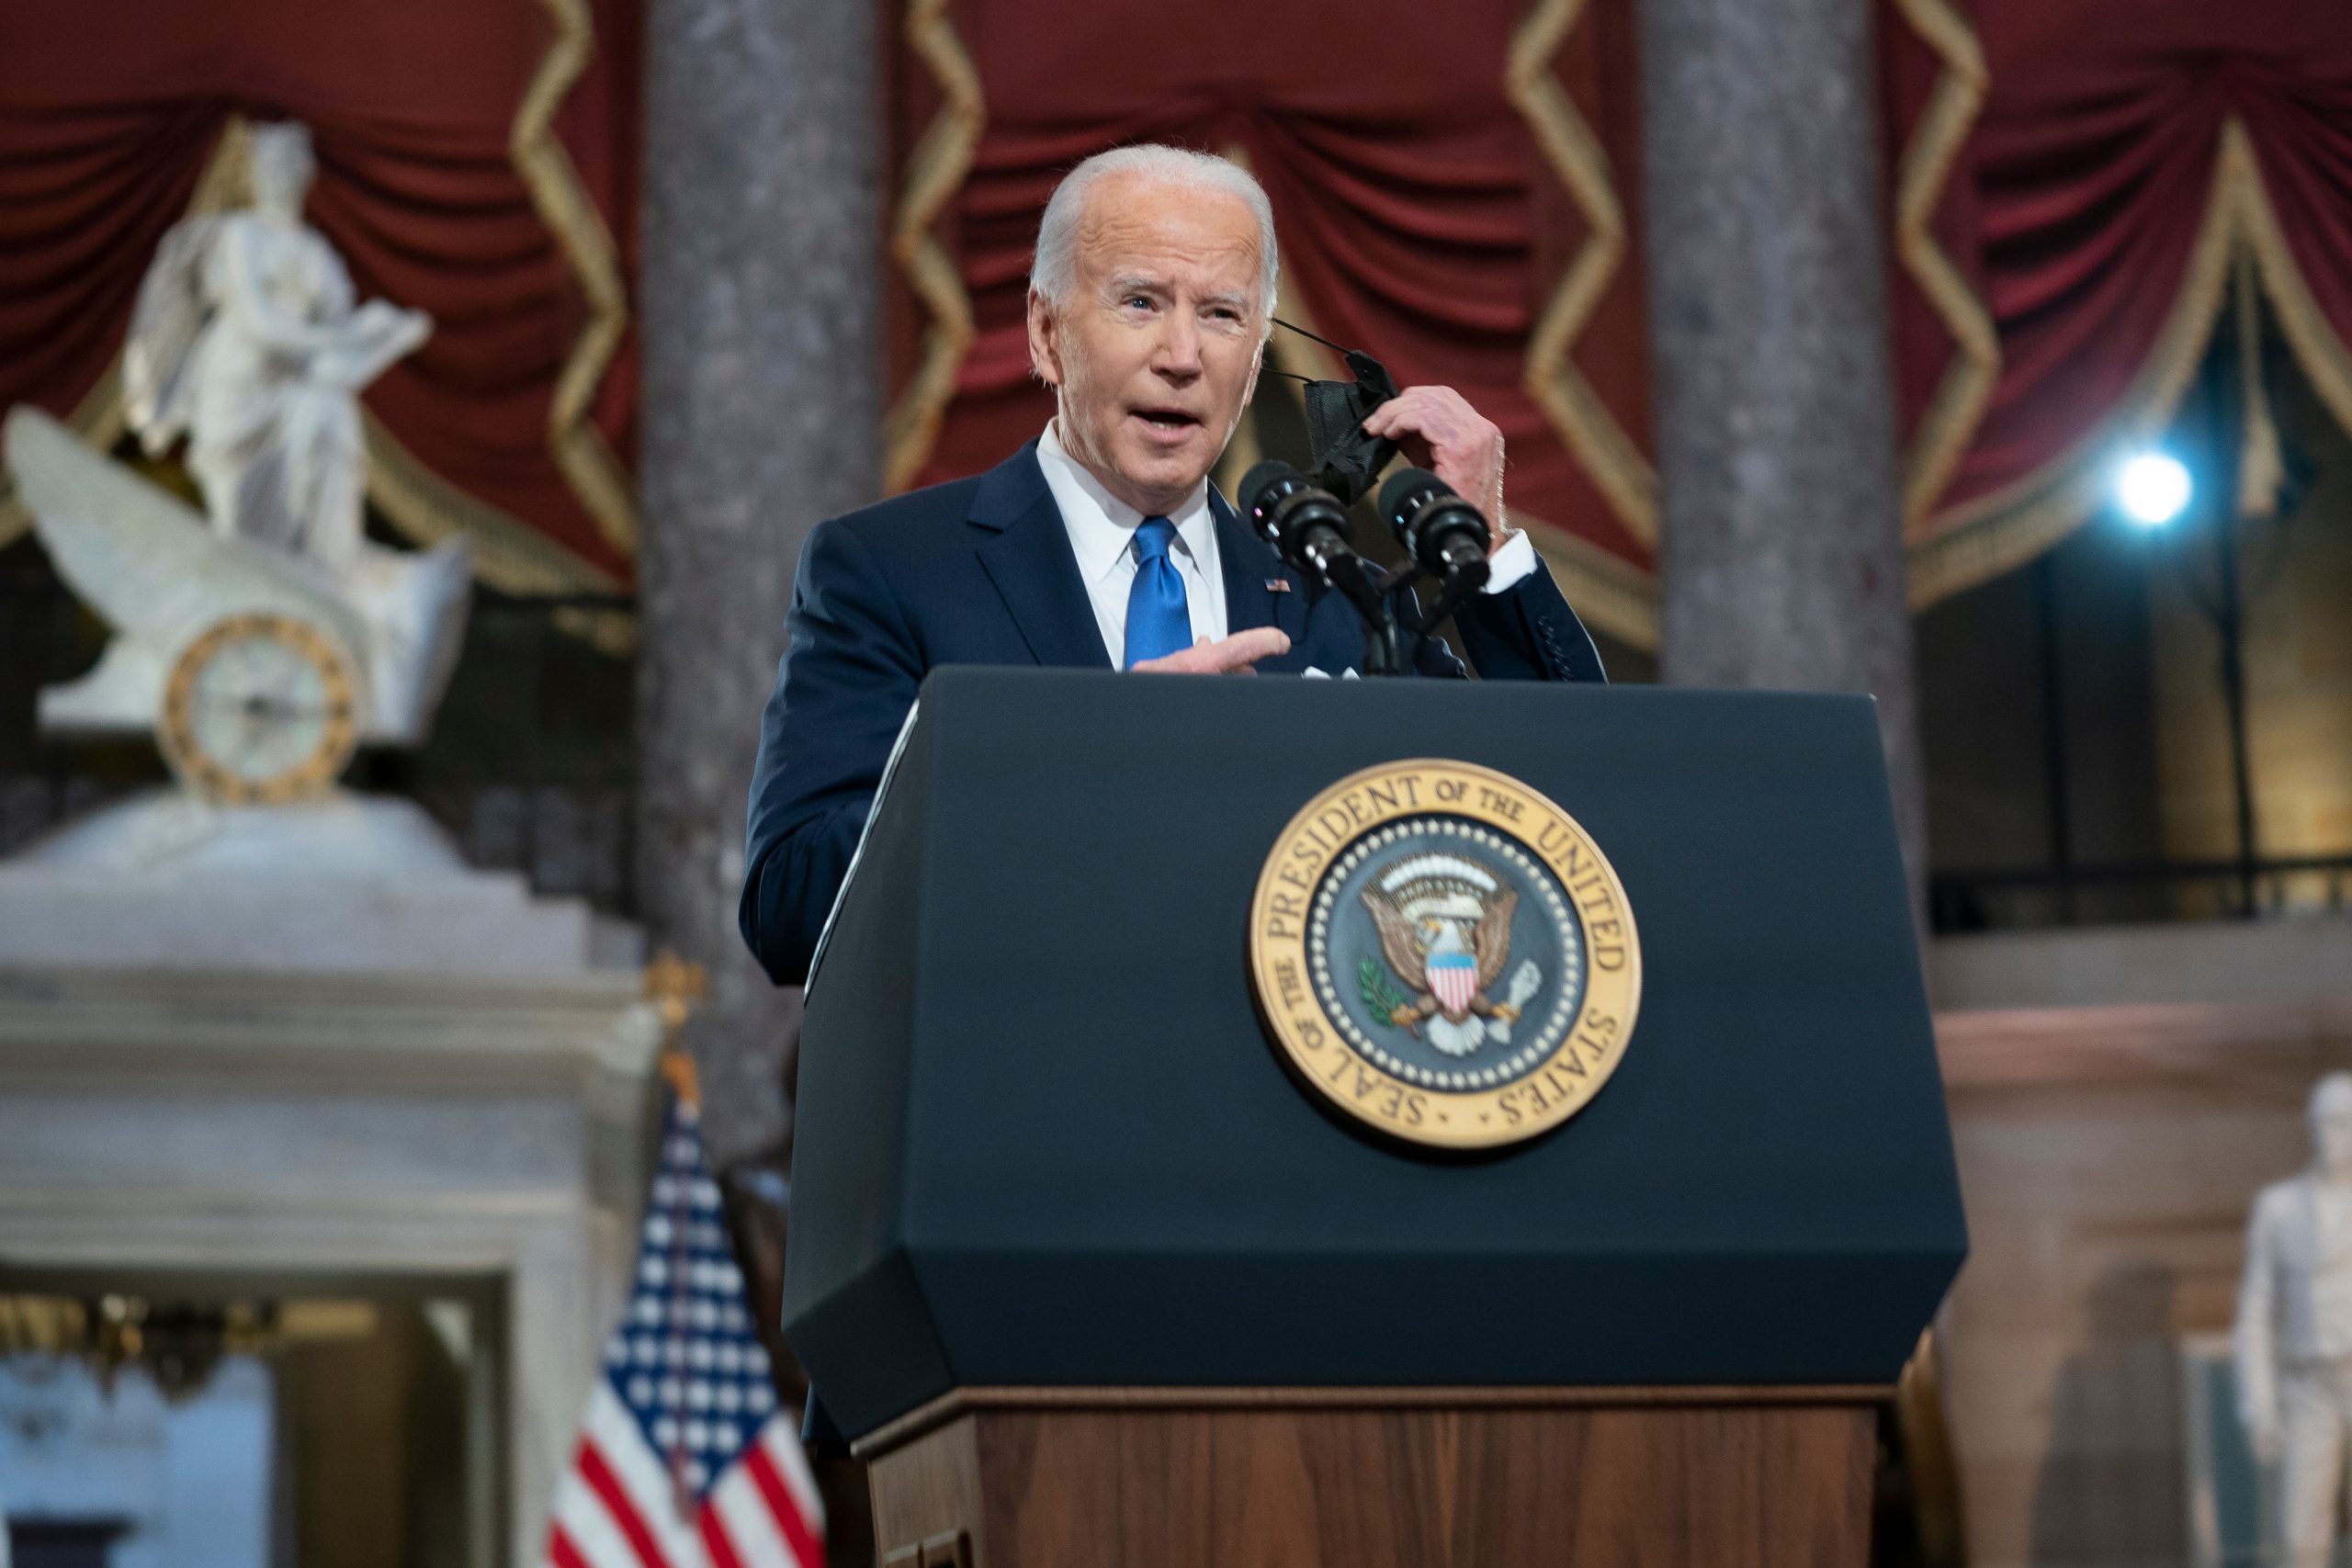 We, the people, endured: US President Joe Biden in January 6 address